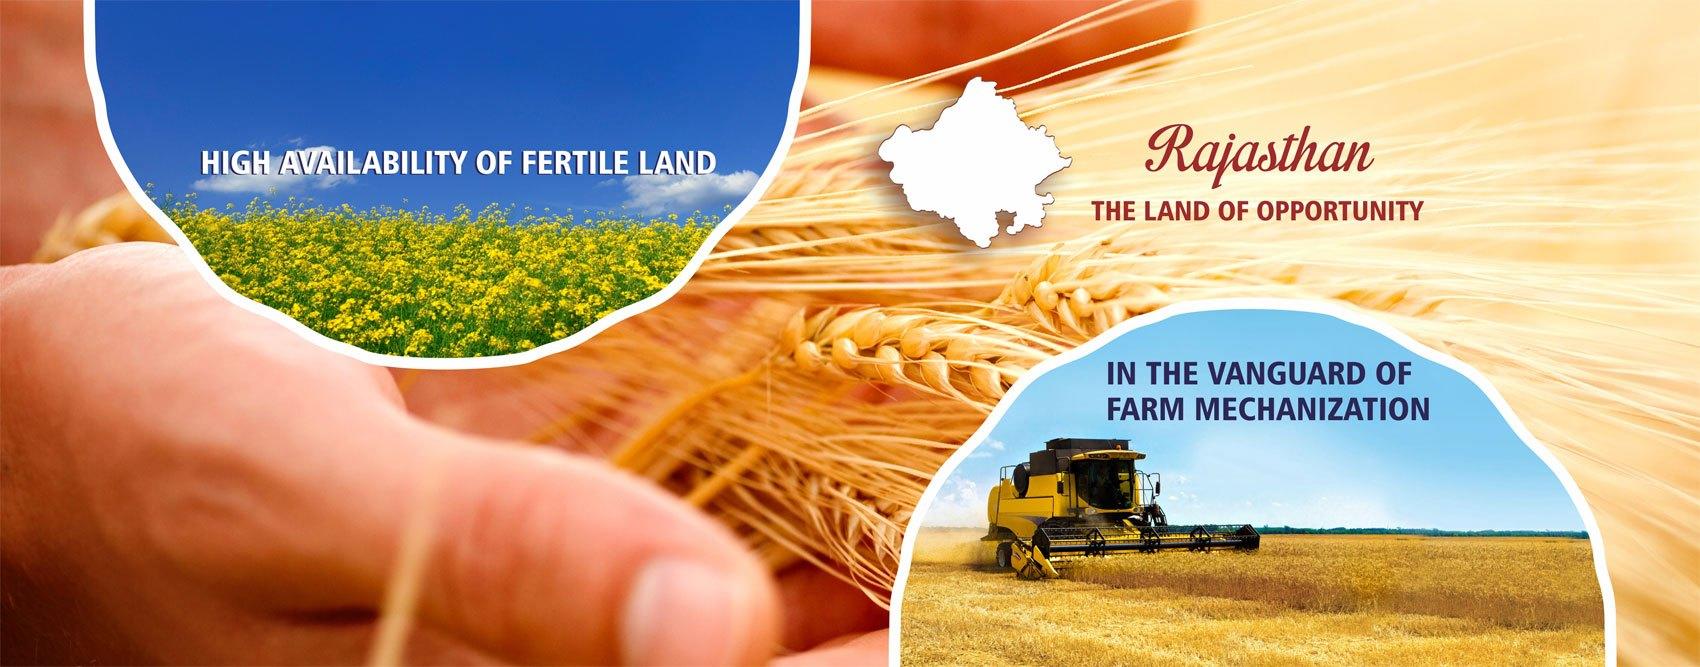 Global Rajasthan Agritech Meet 2017-7th to 9th November